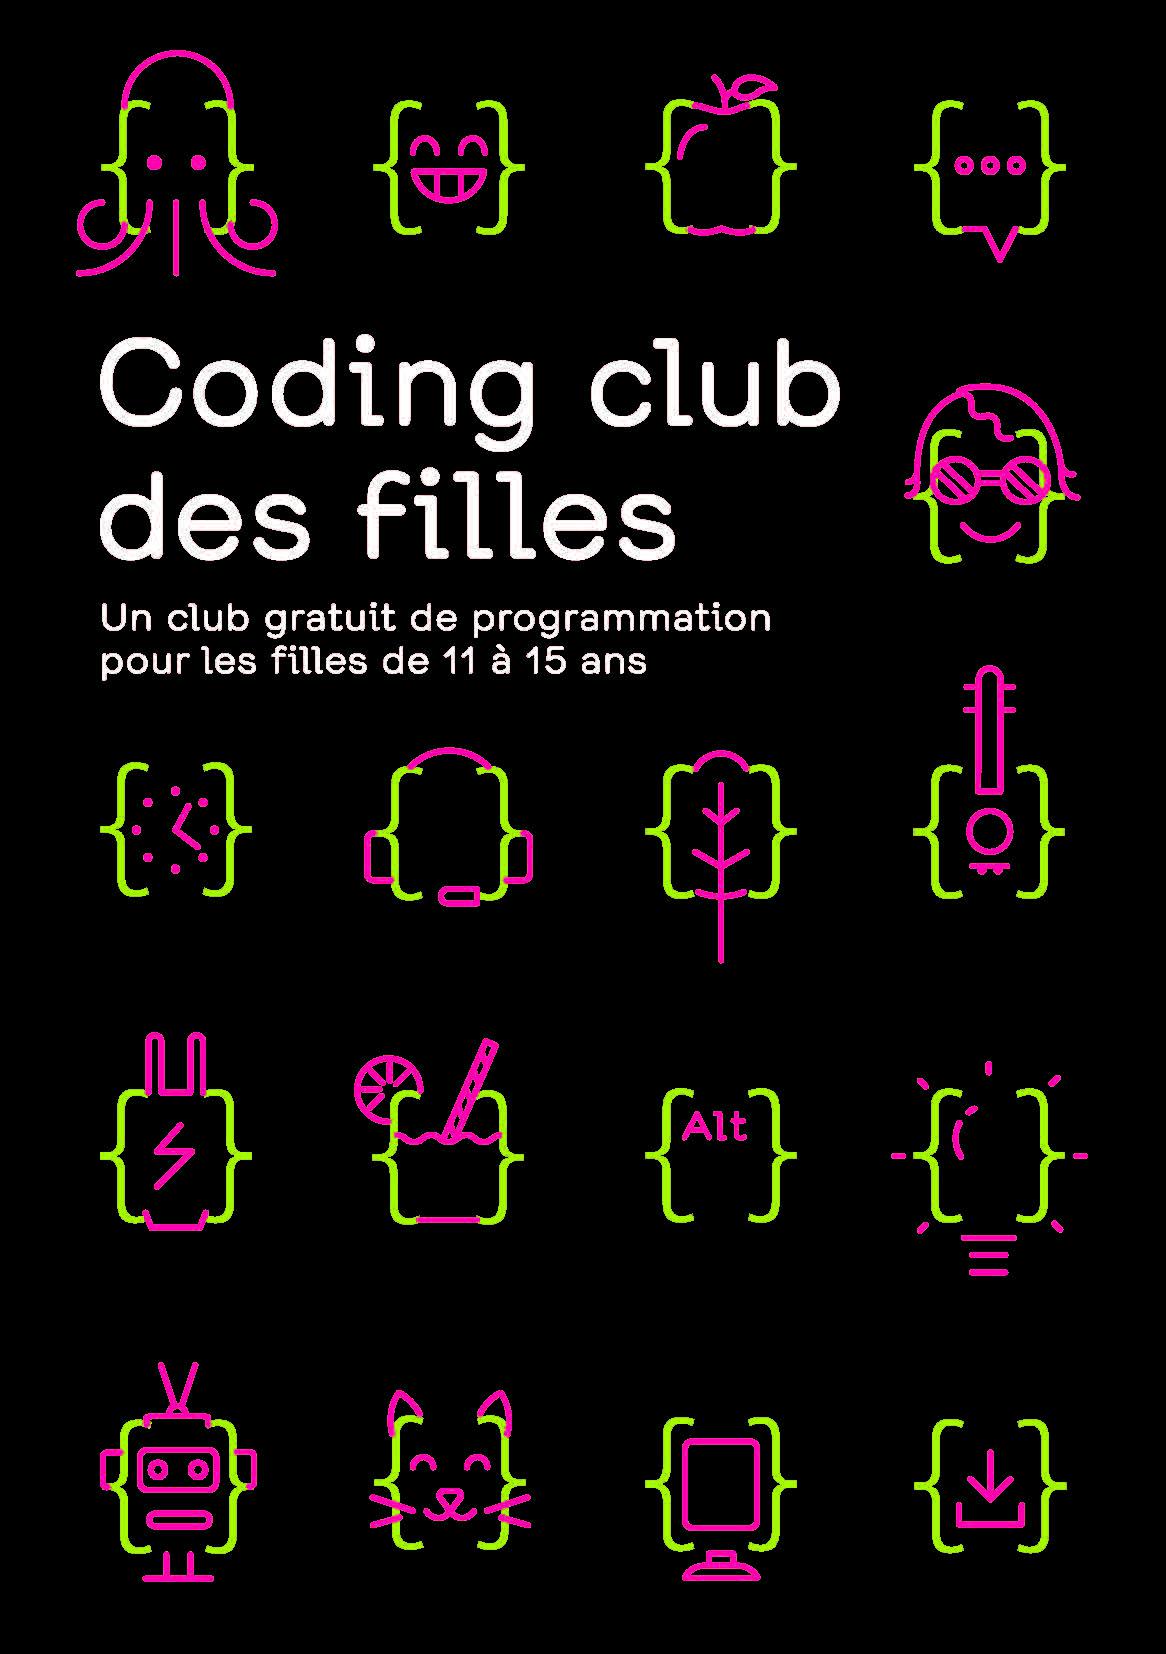 Coding club des filles